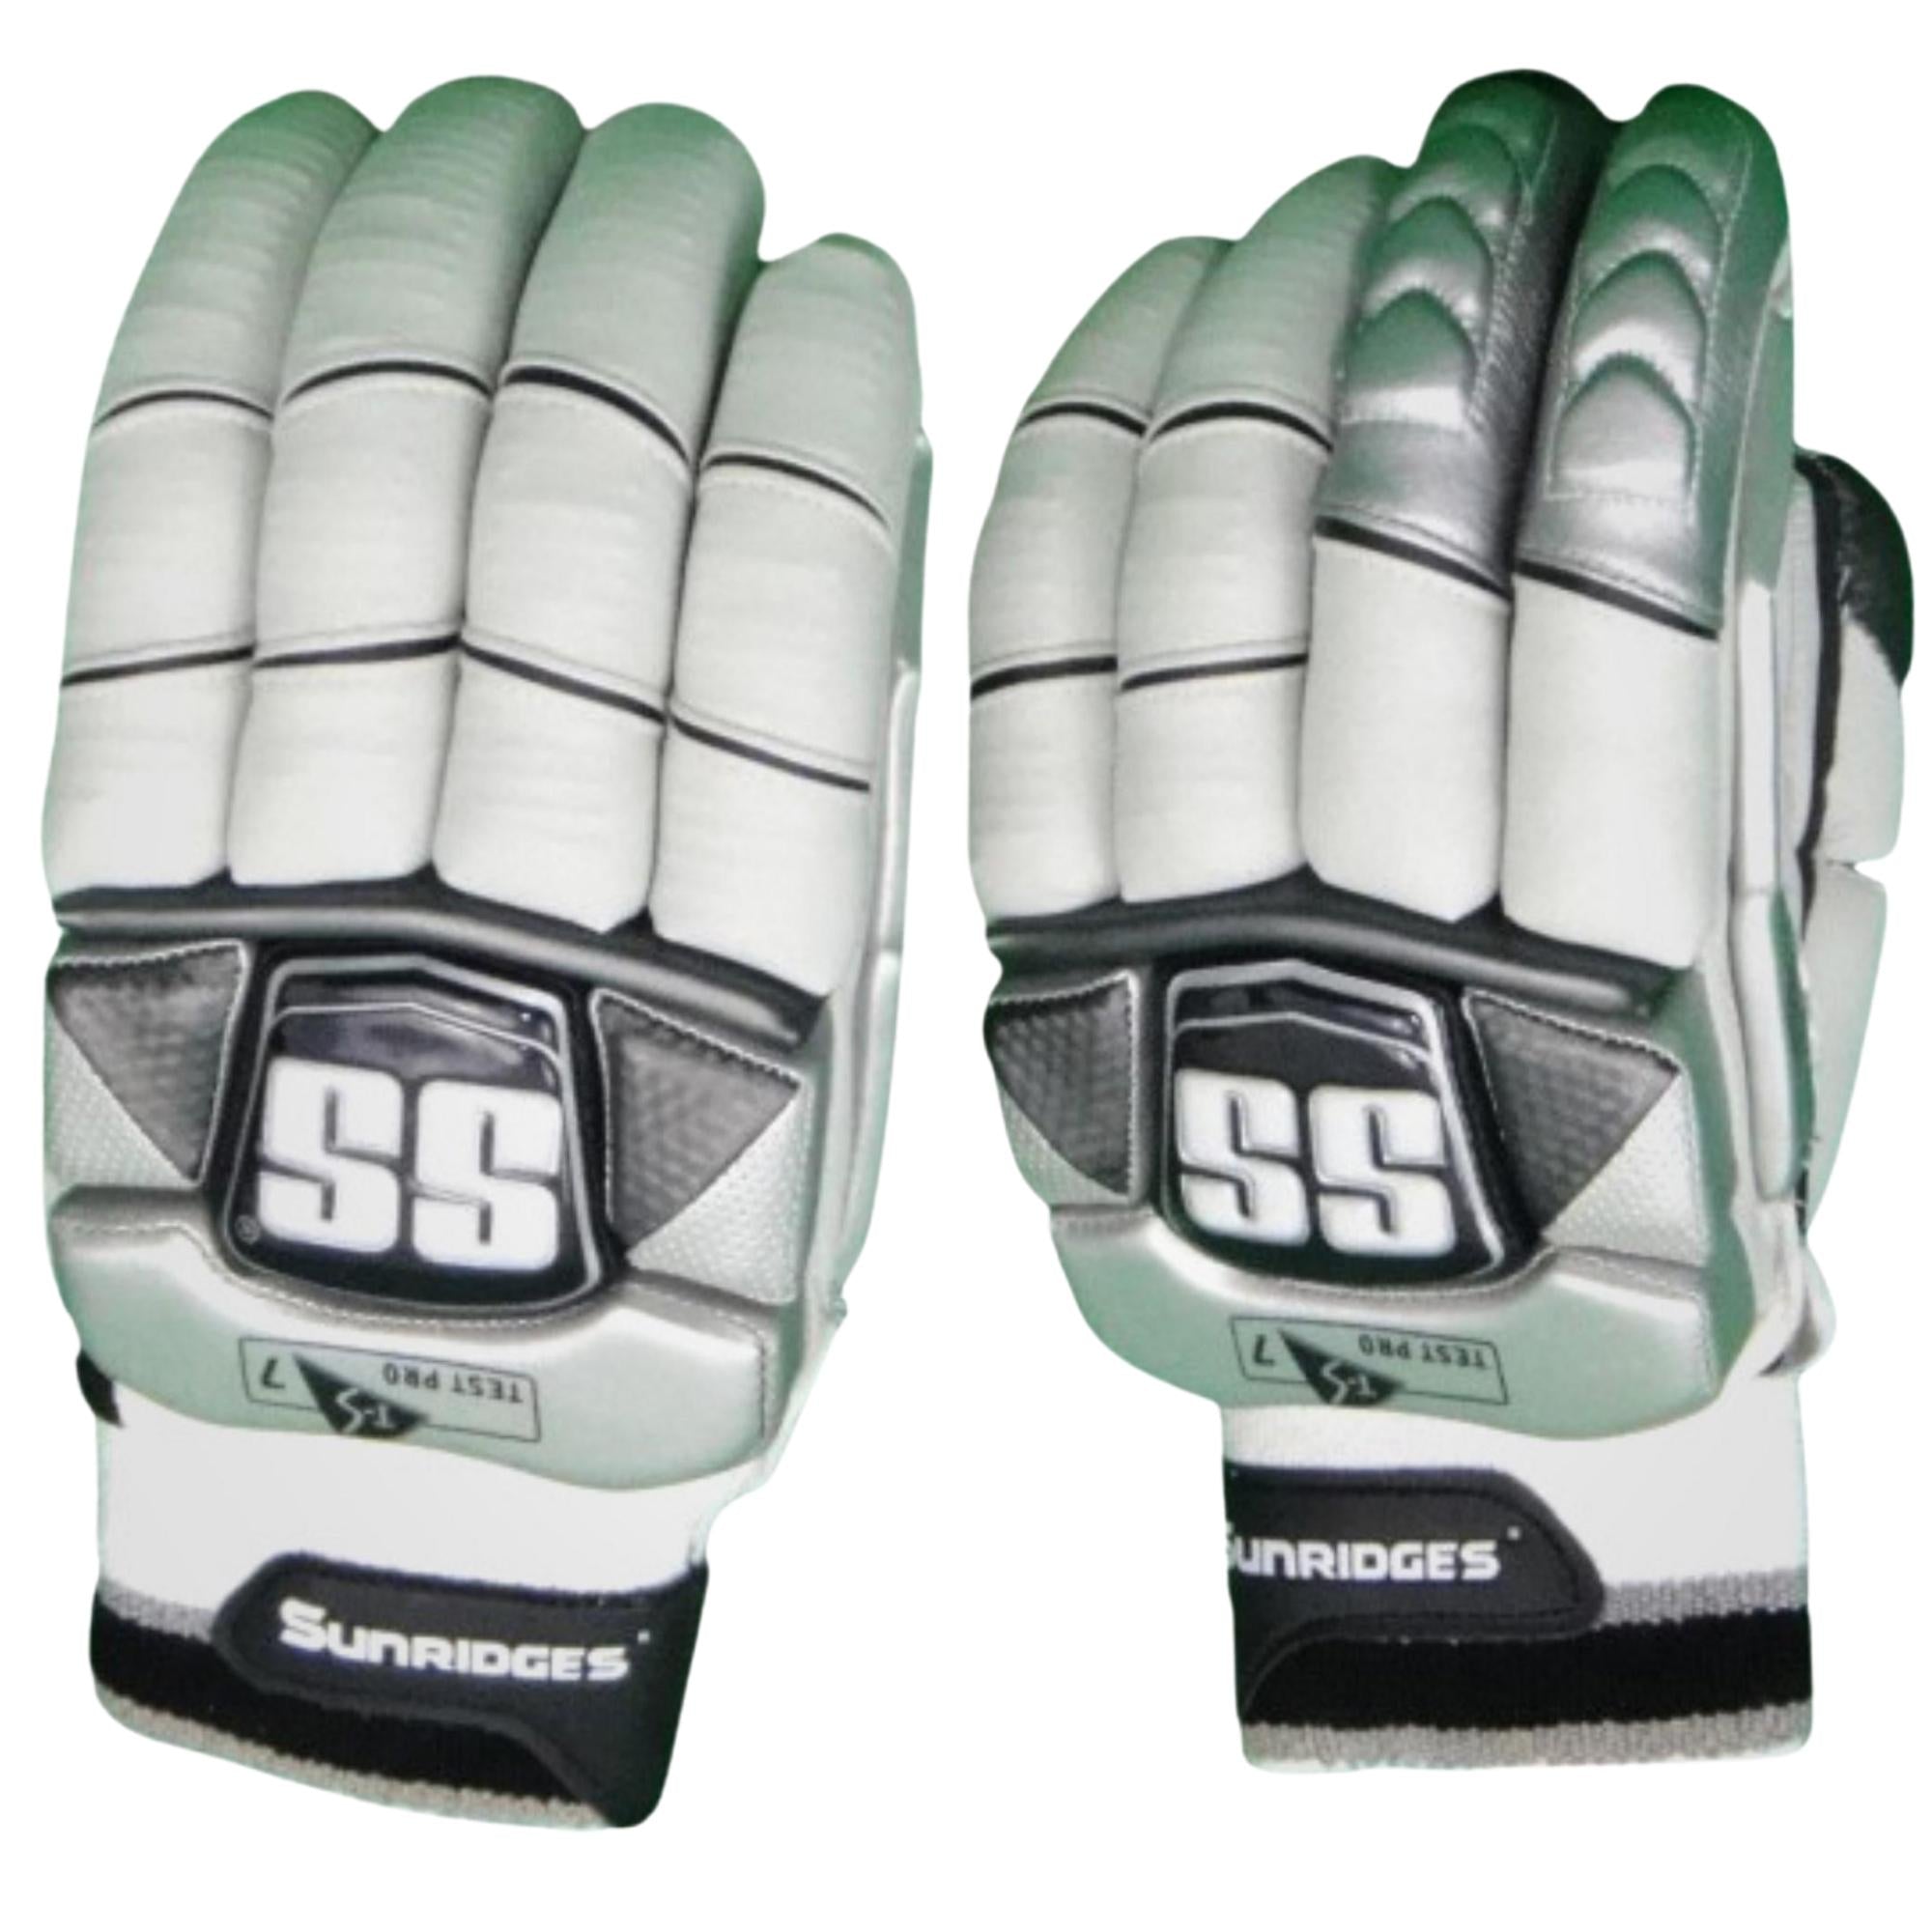 SS Test Pro Batting Gloves